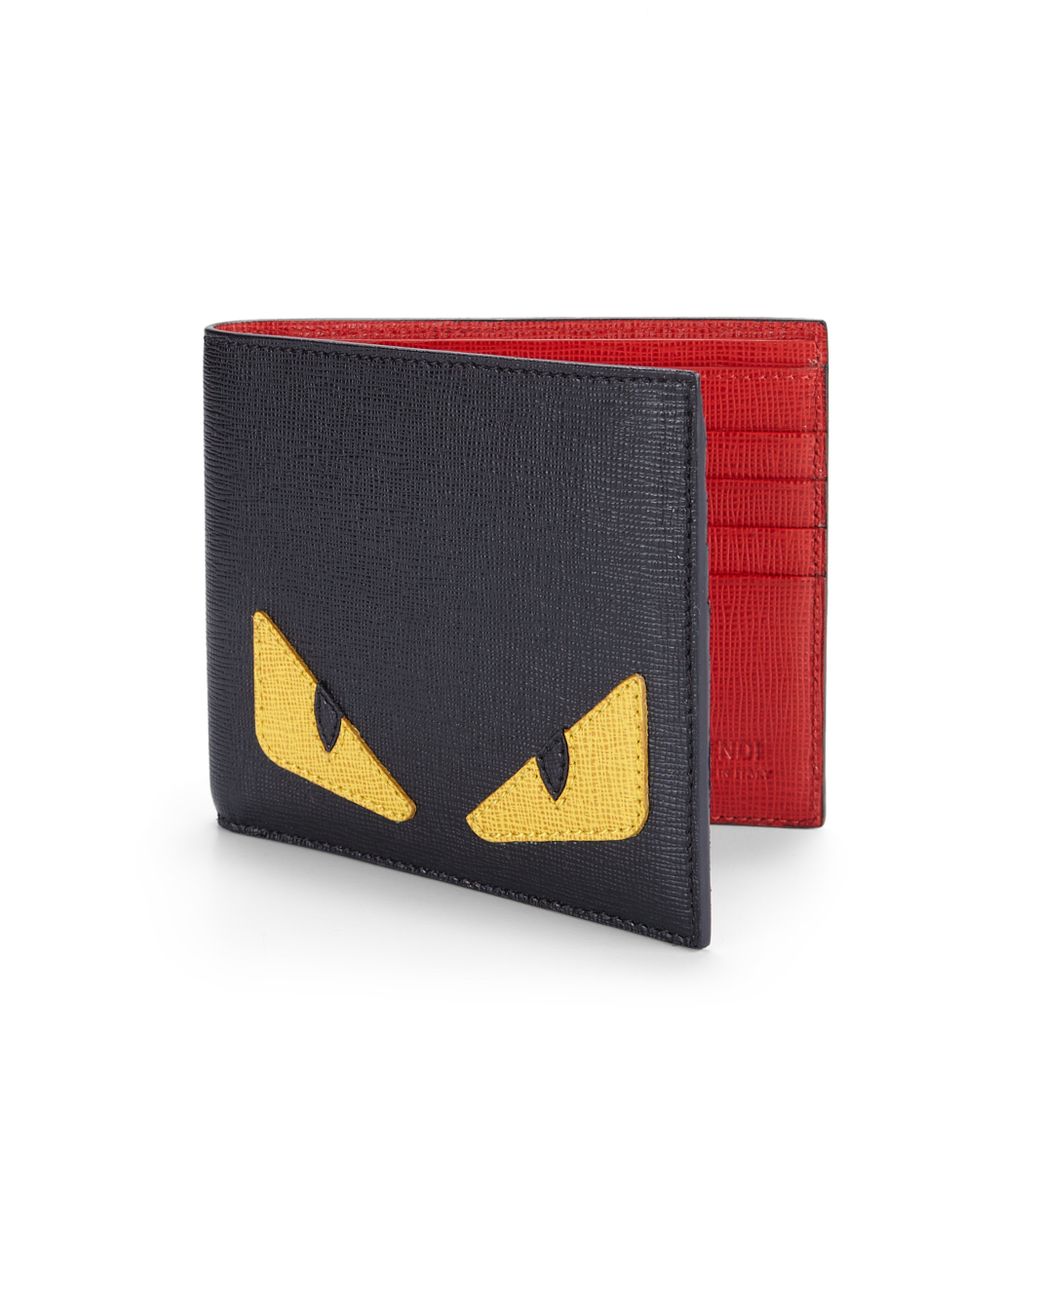 Fendi Simple Monster Wallet in Red for Men | Lyst